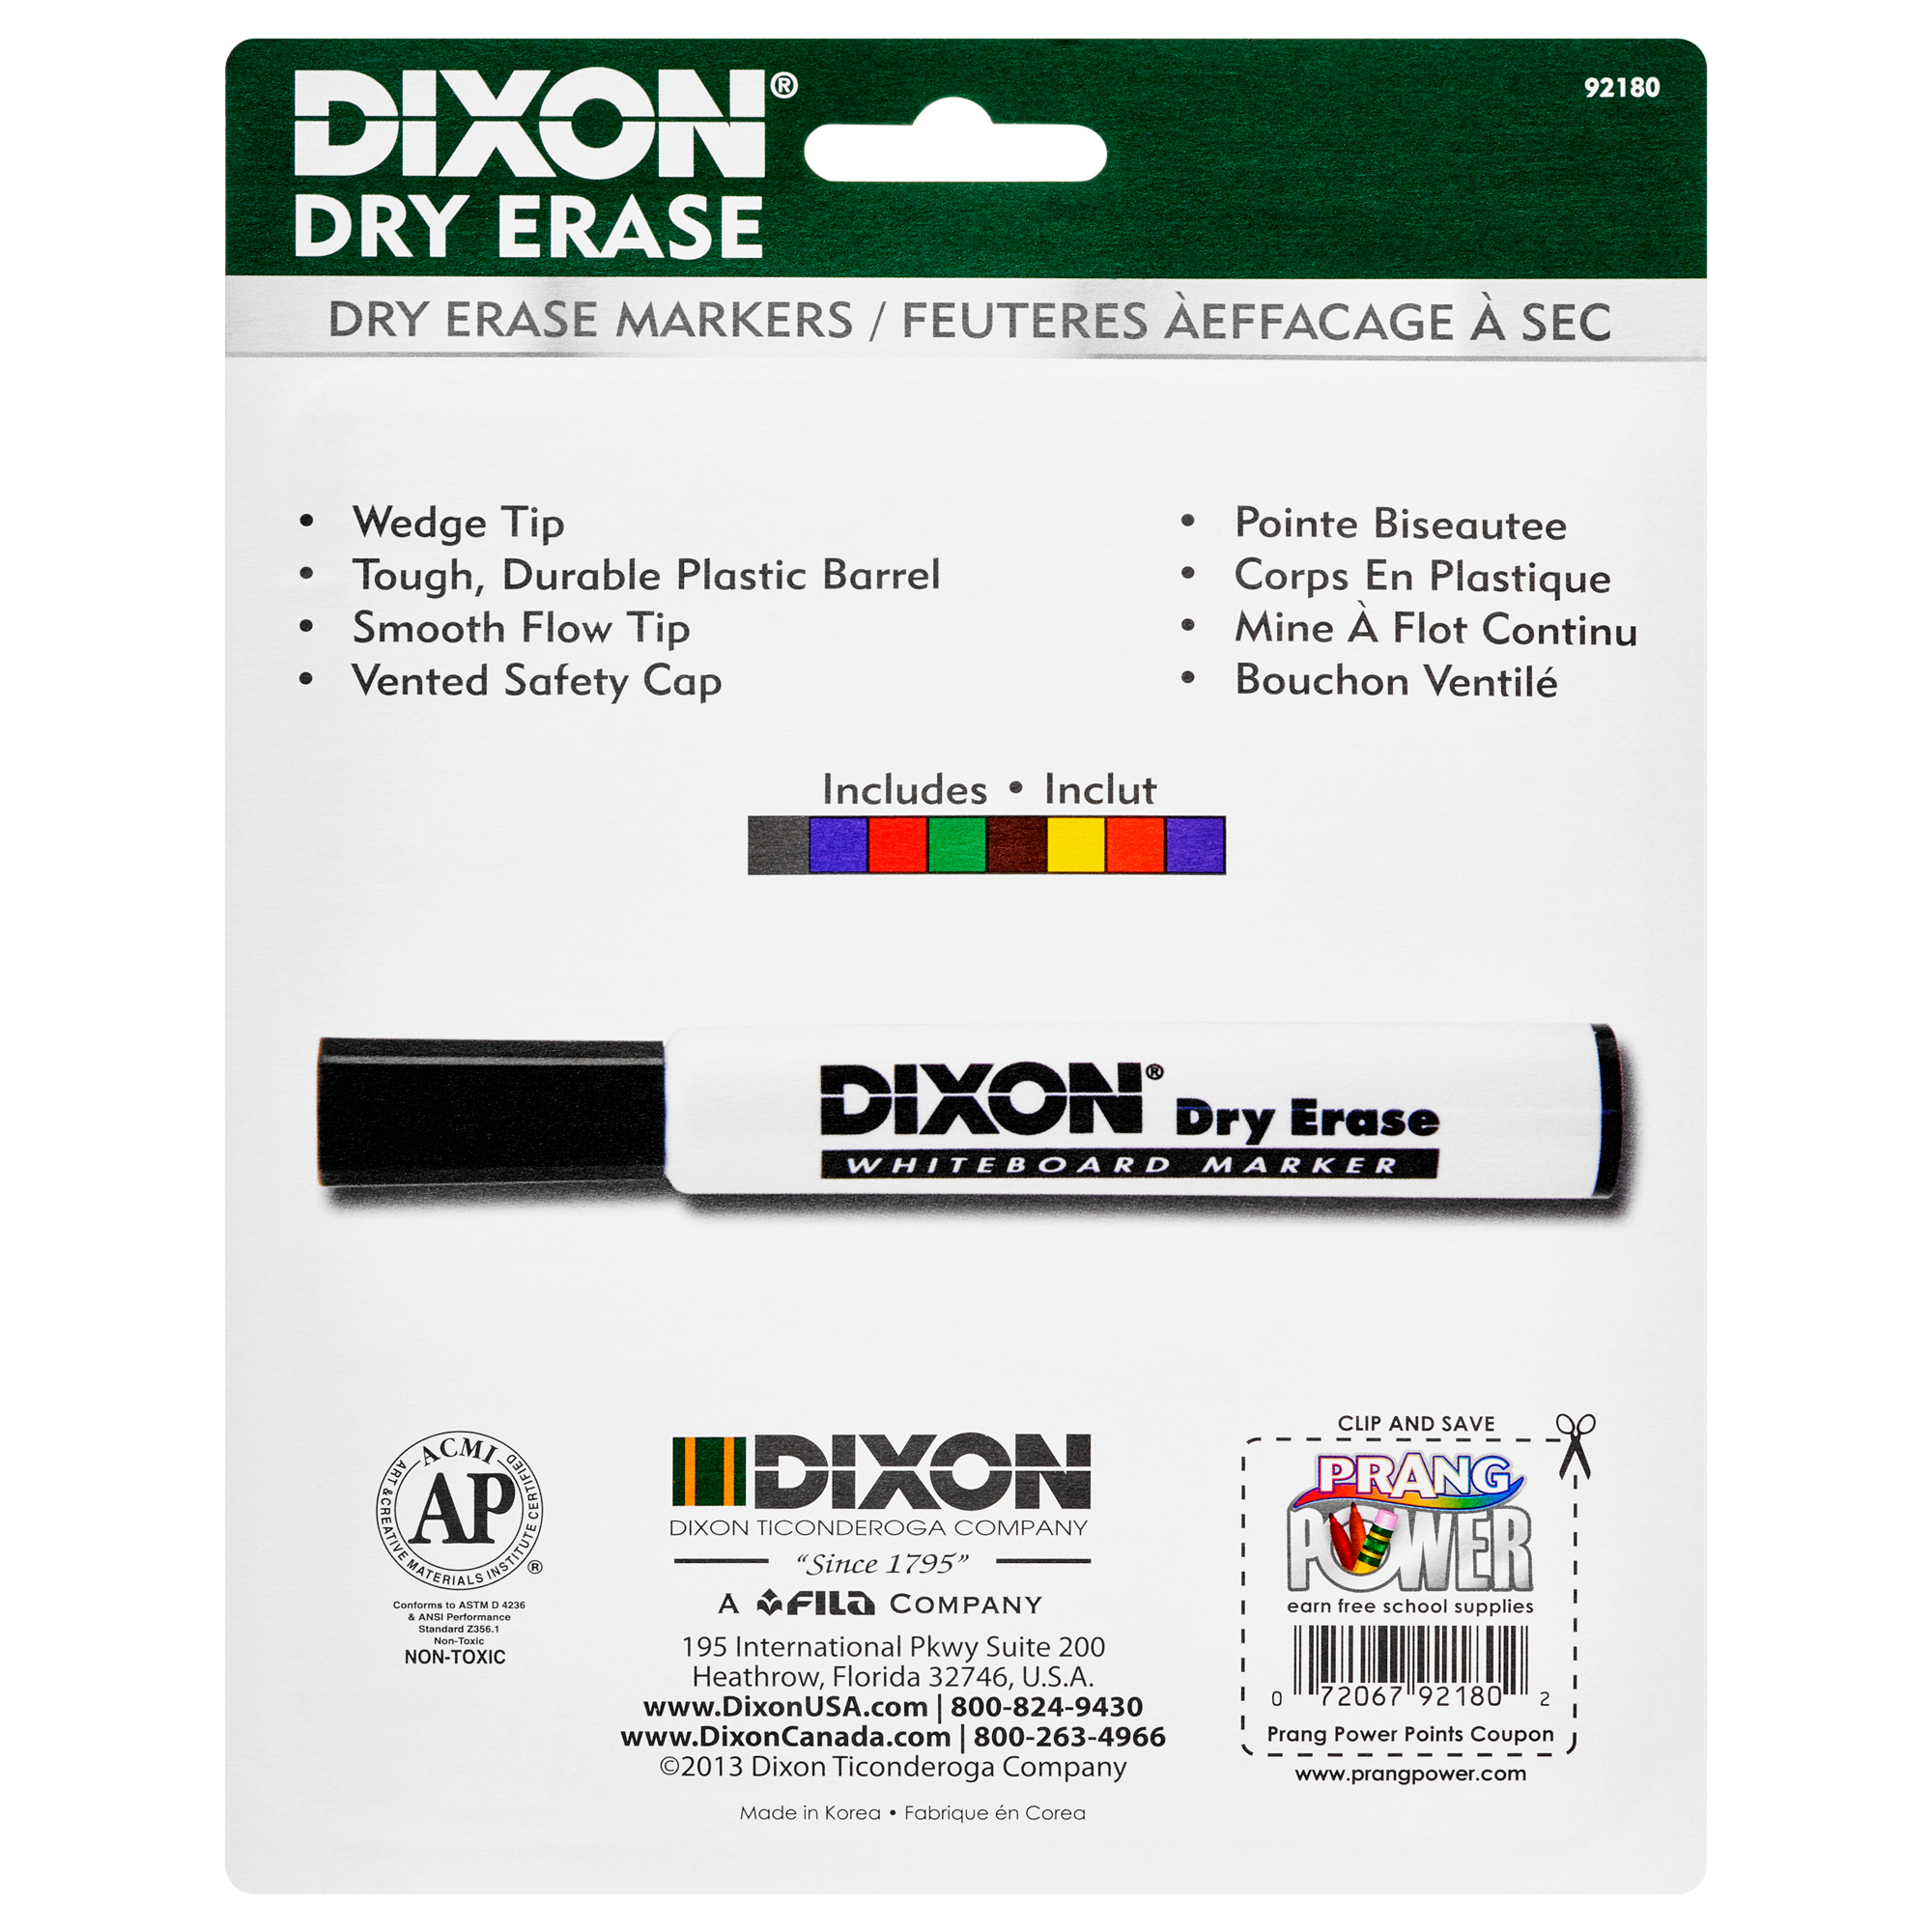 Ticonderoga Dry Erase Whiteboard Markers - Broad, Fine Point Type - Wedge Point Style - Black - 1 Dozen